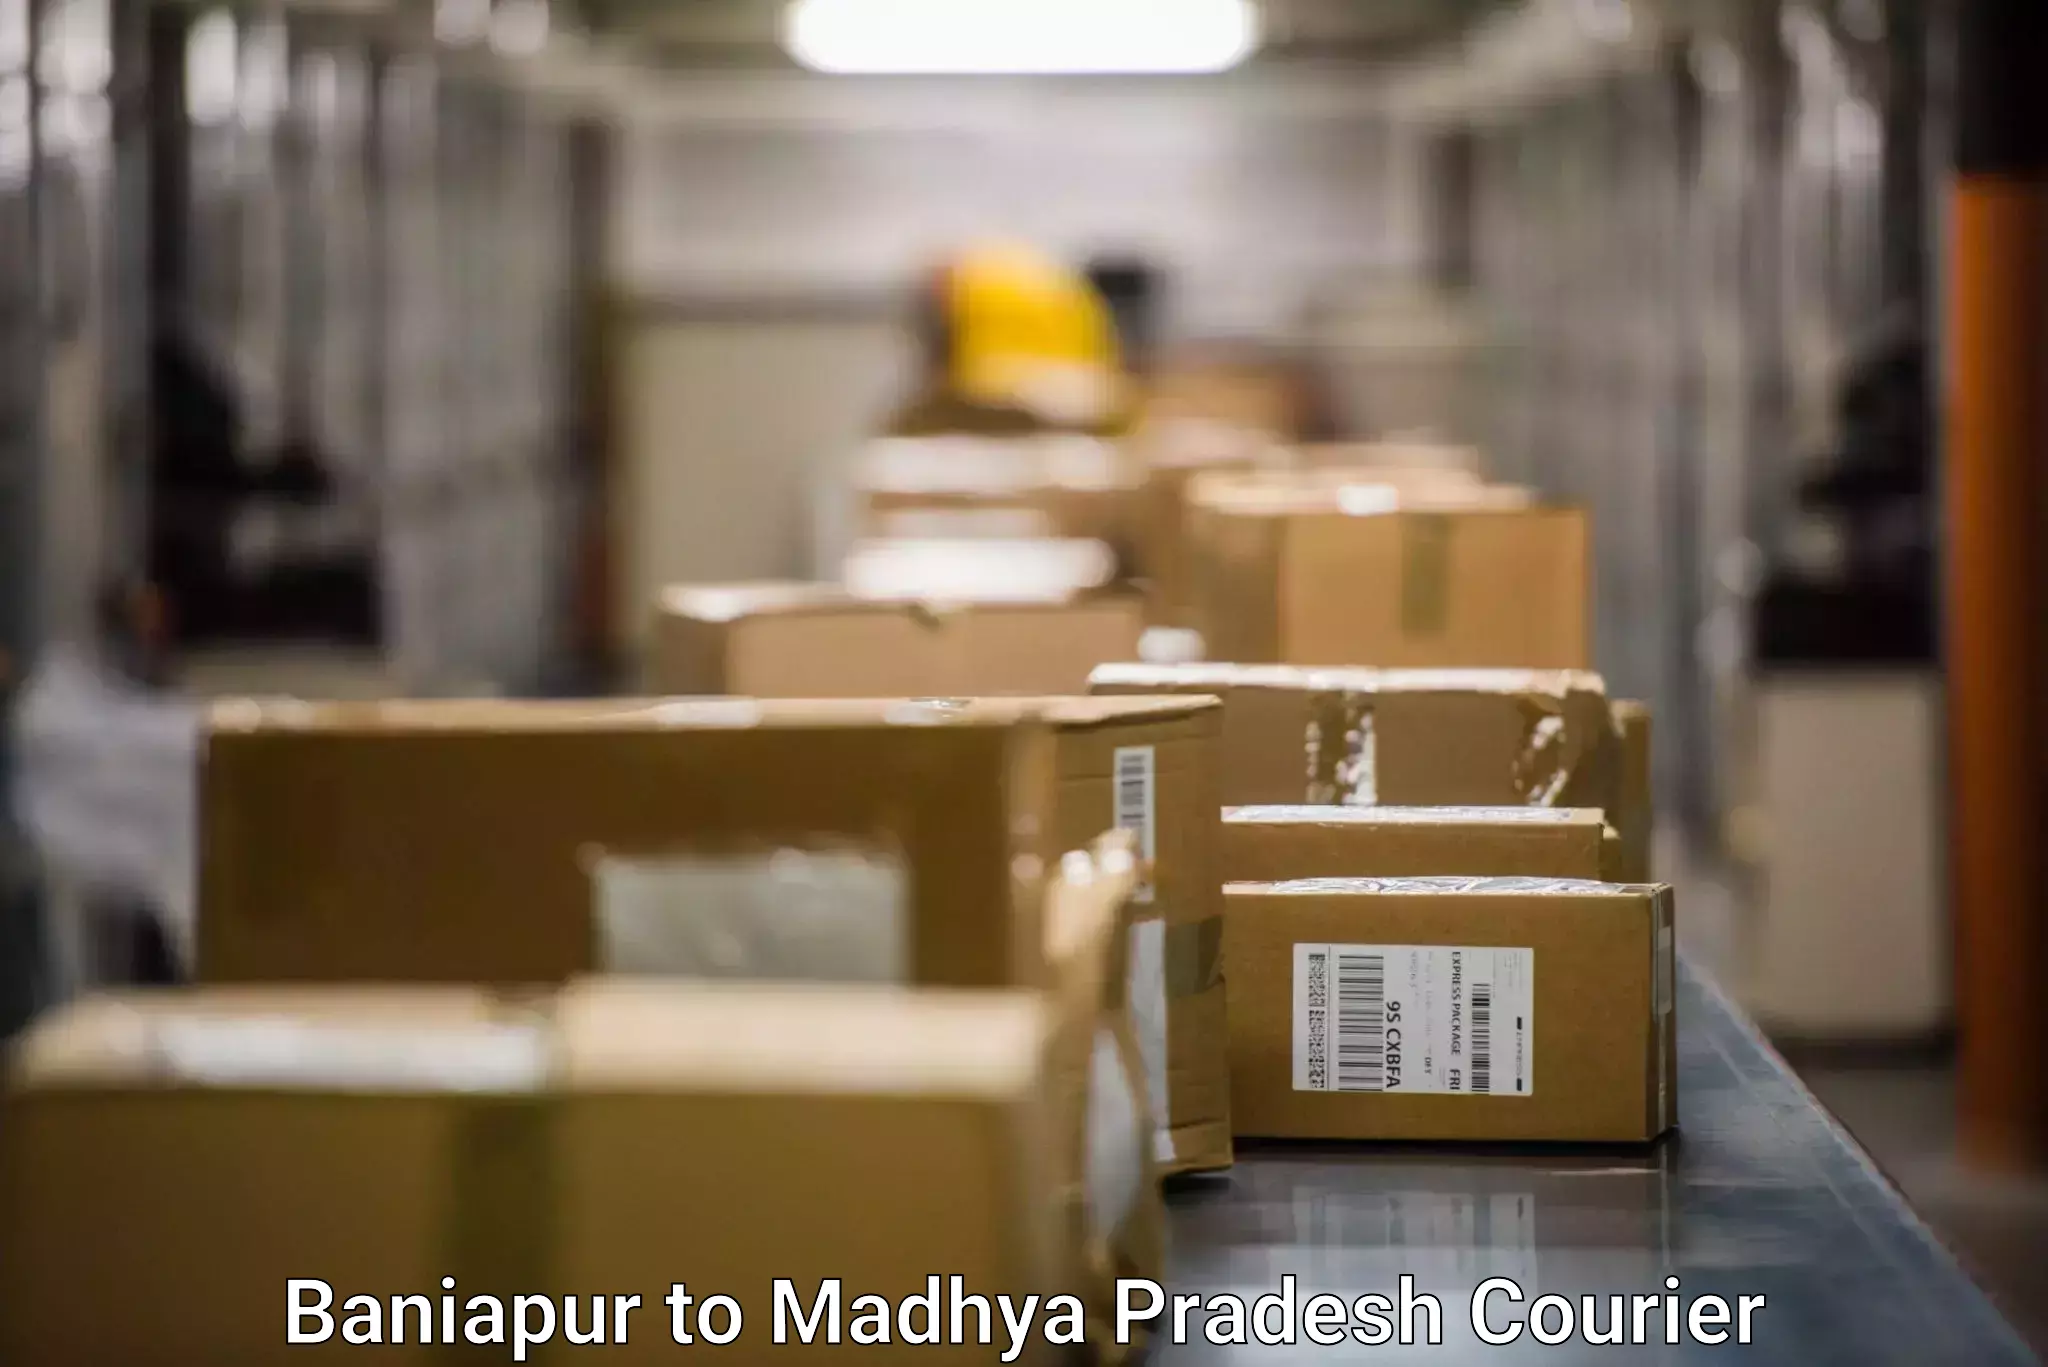 Courier service comparison Baniapur to Jhunku